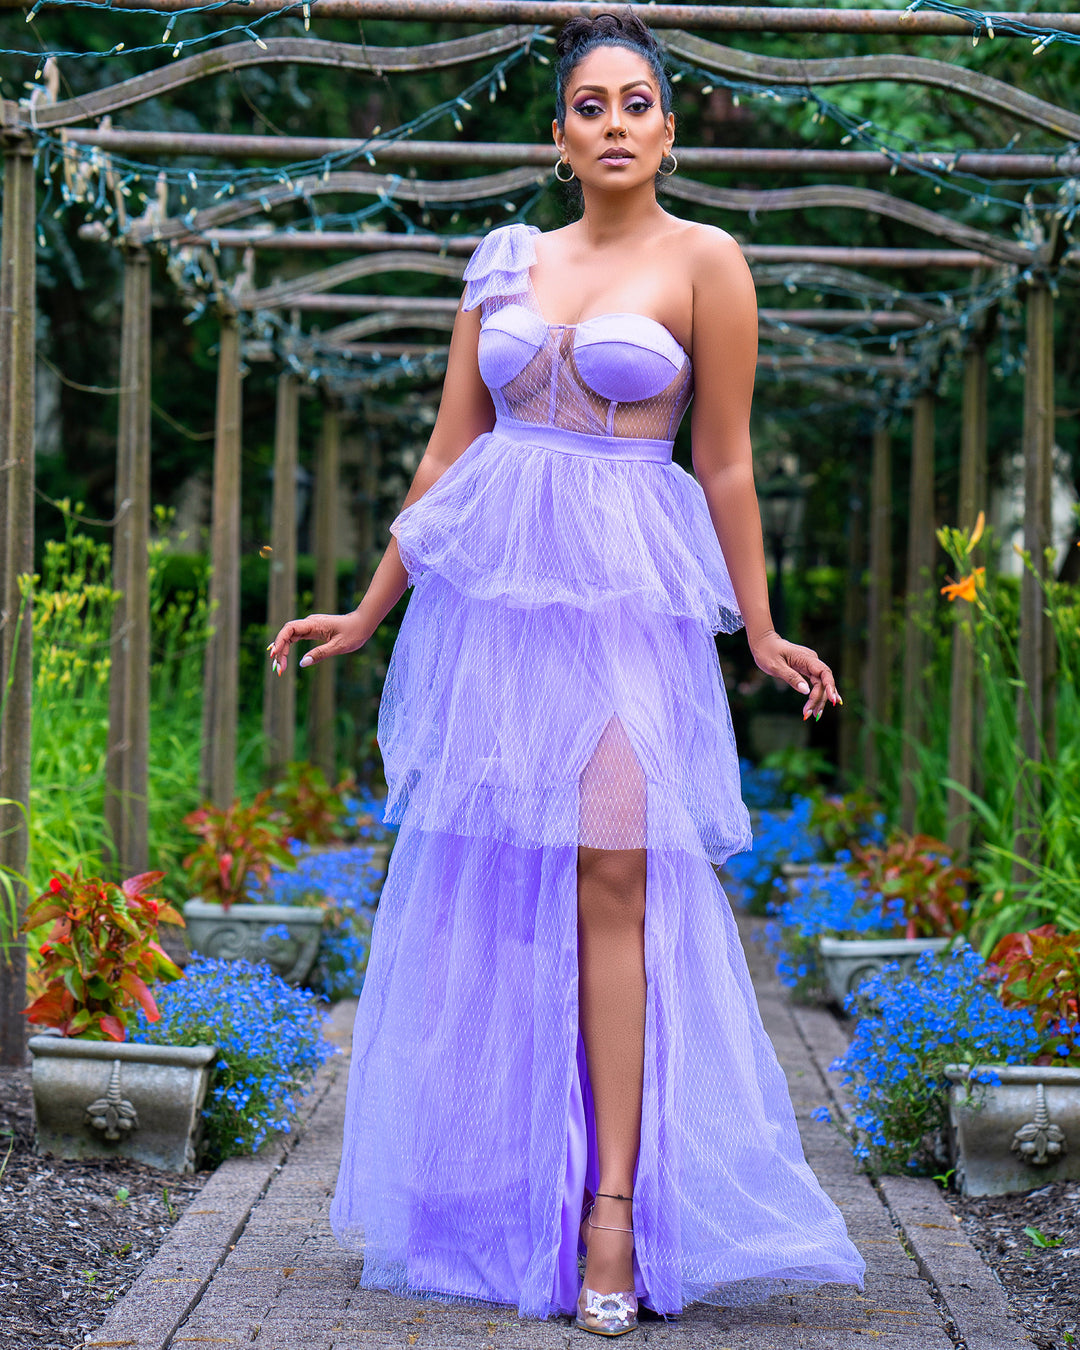 Farrah Tulle Dress Lavender – Rehabcouture